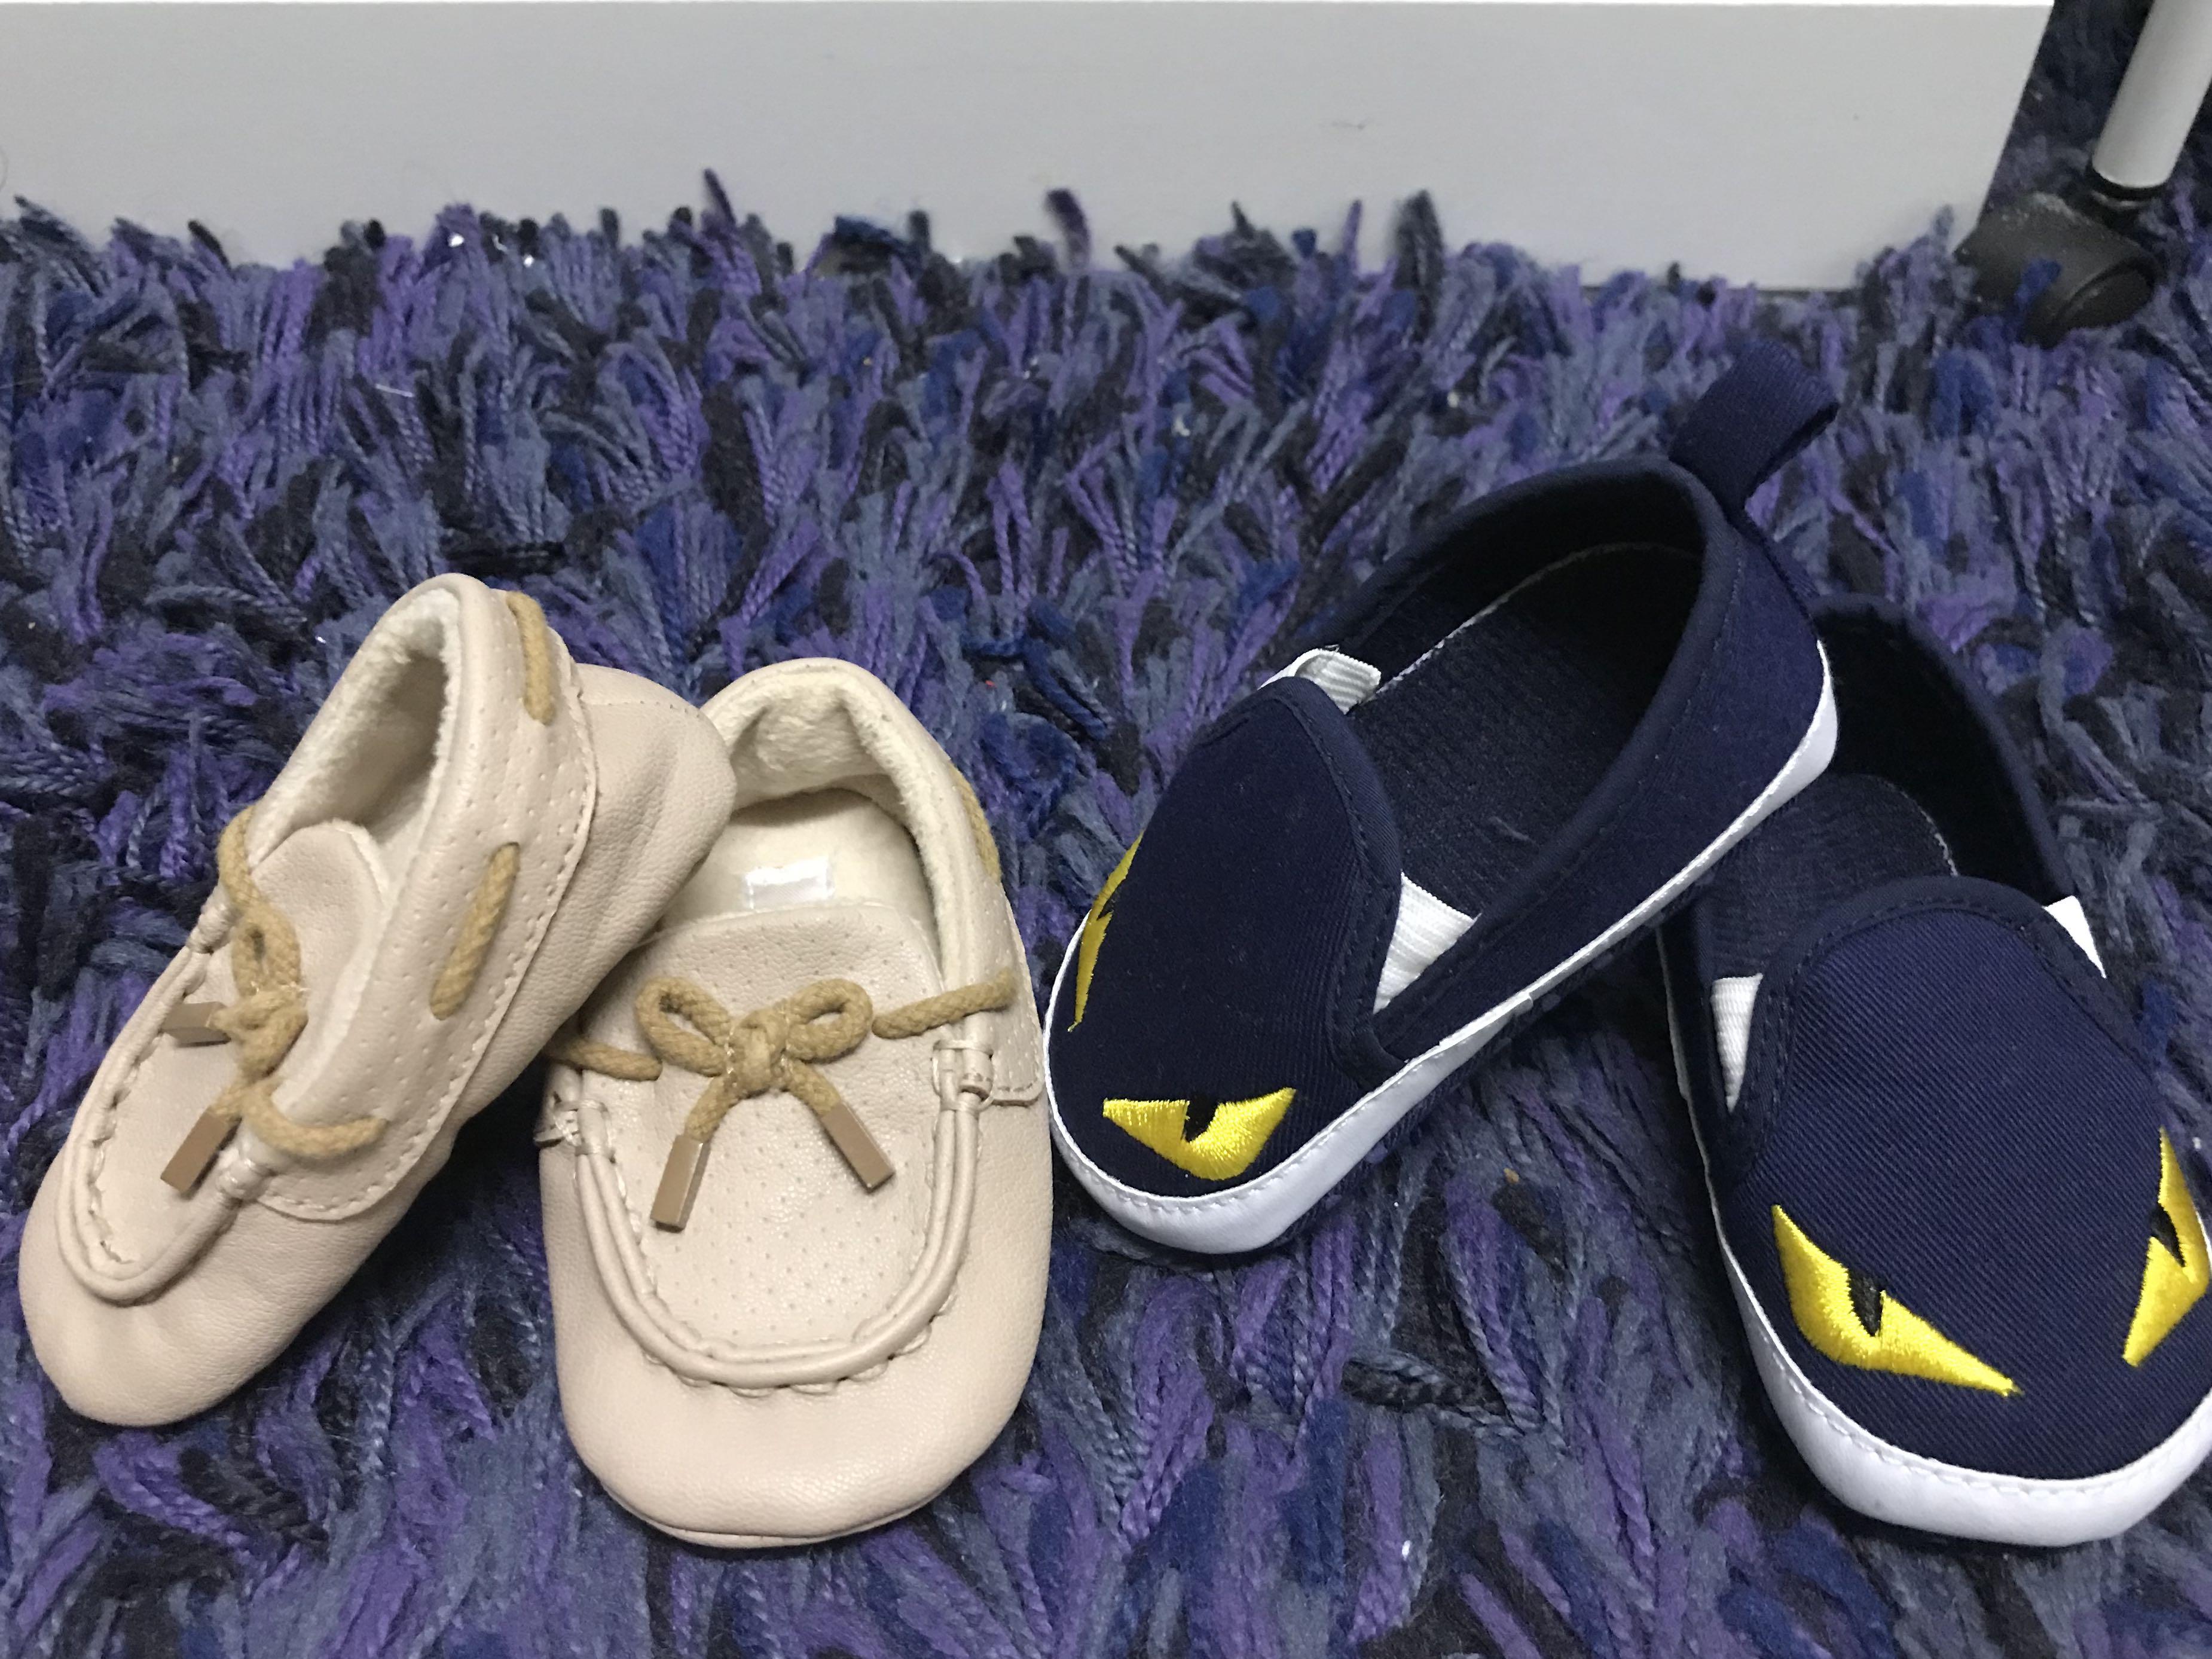 fendi shoes for babies